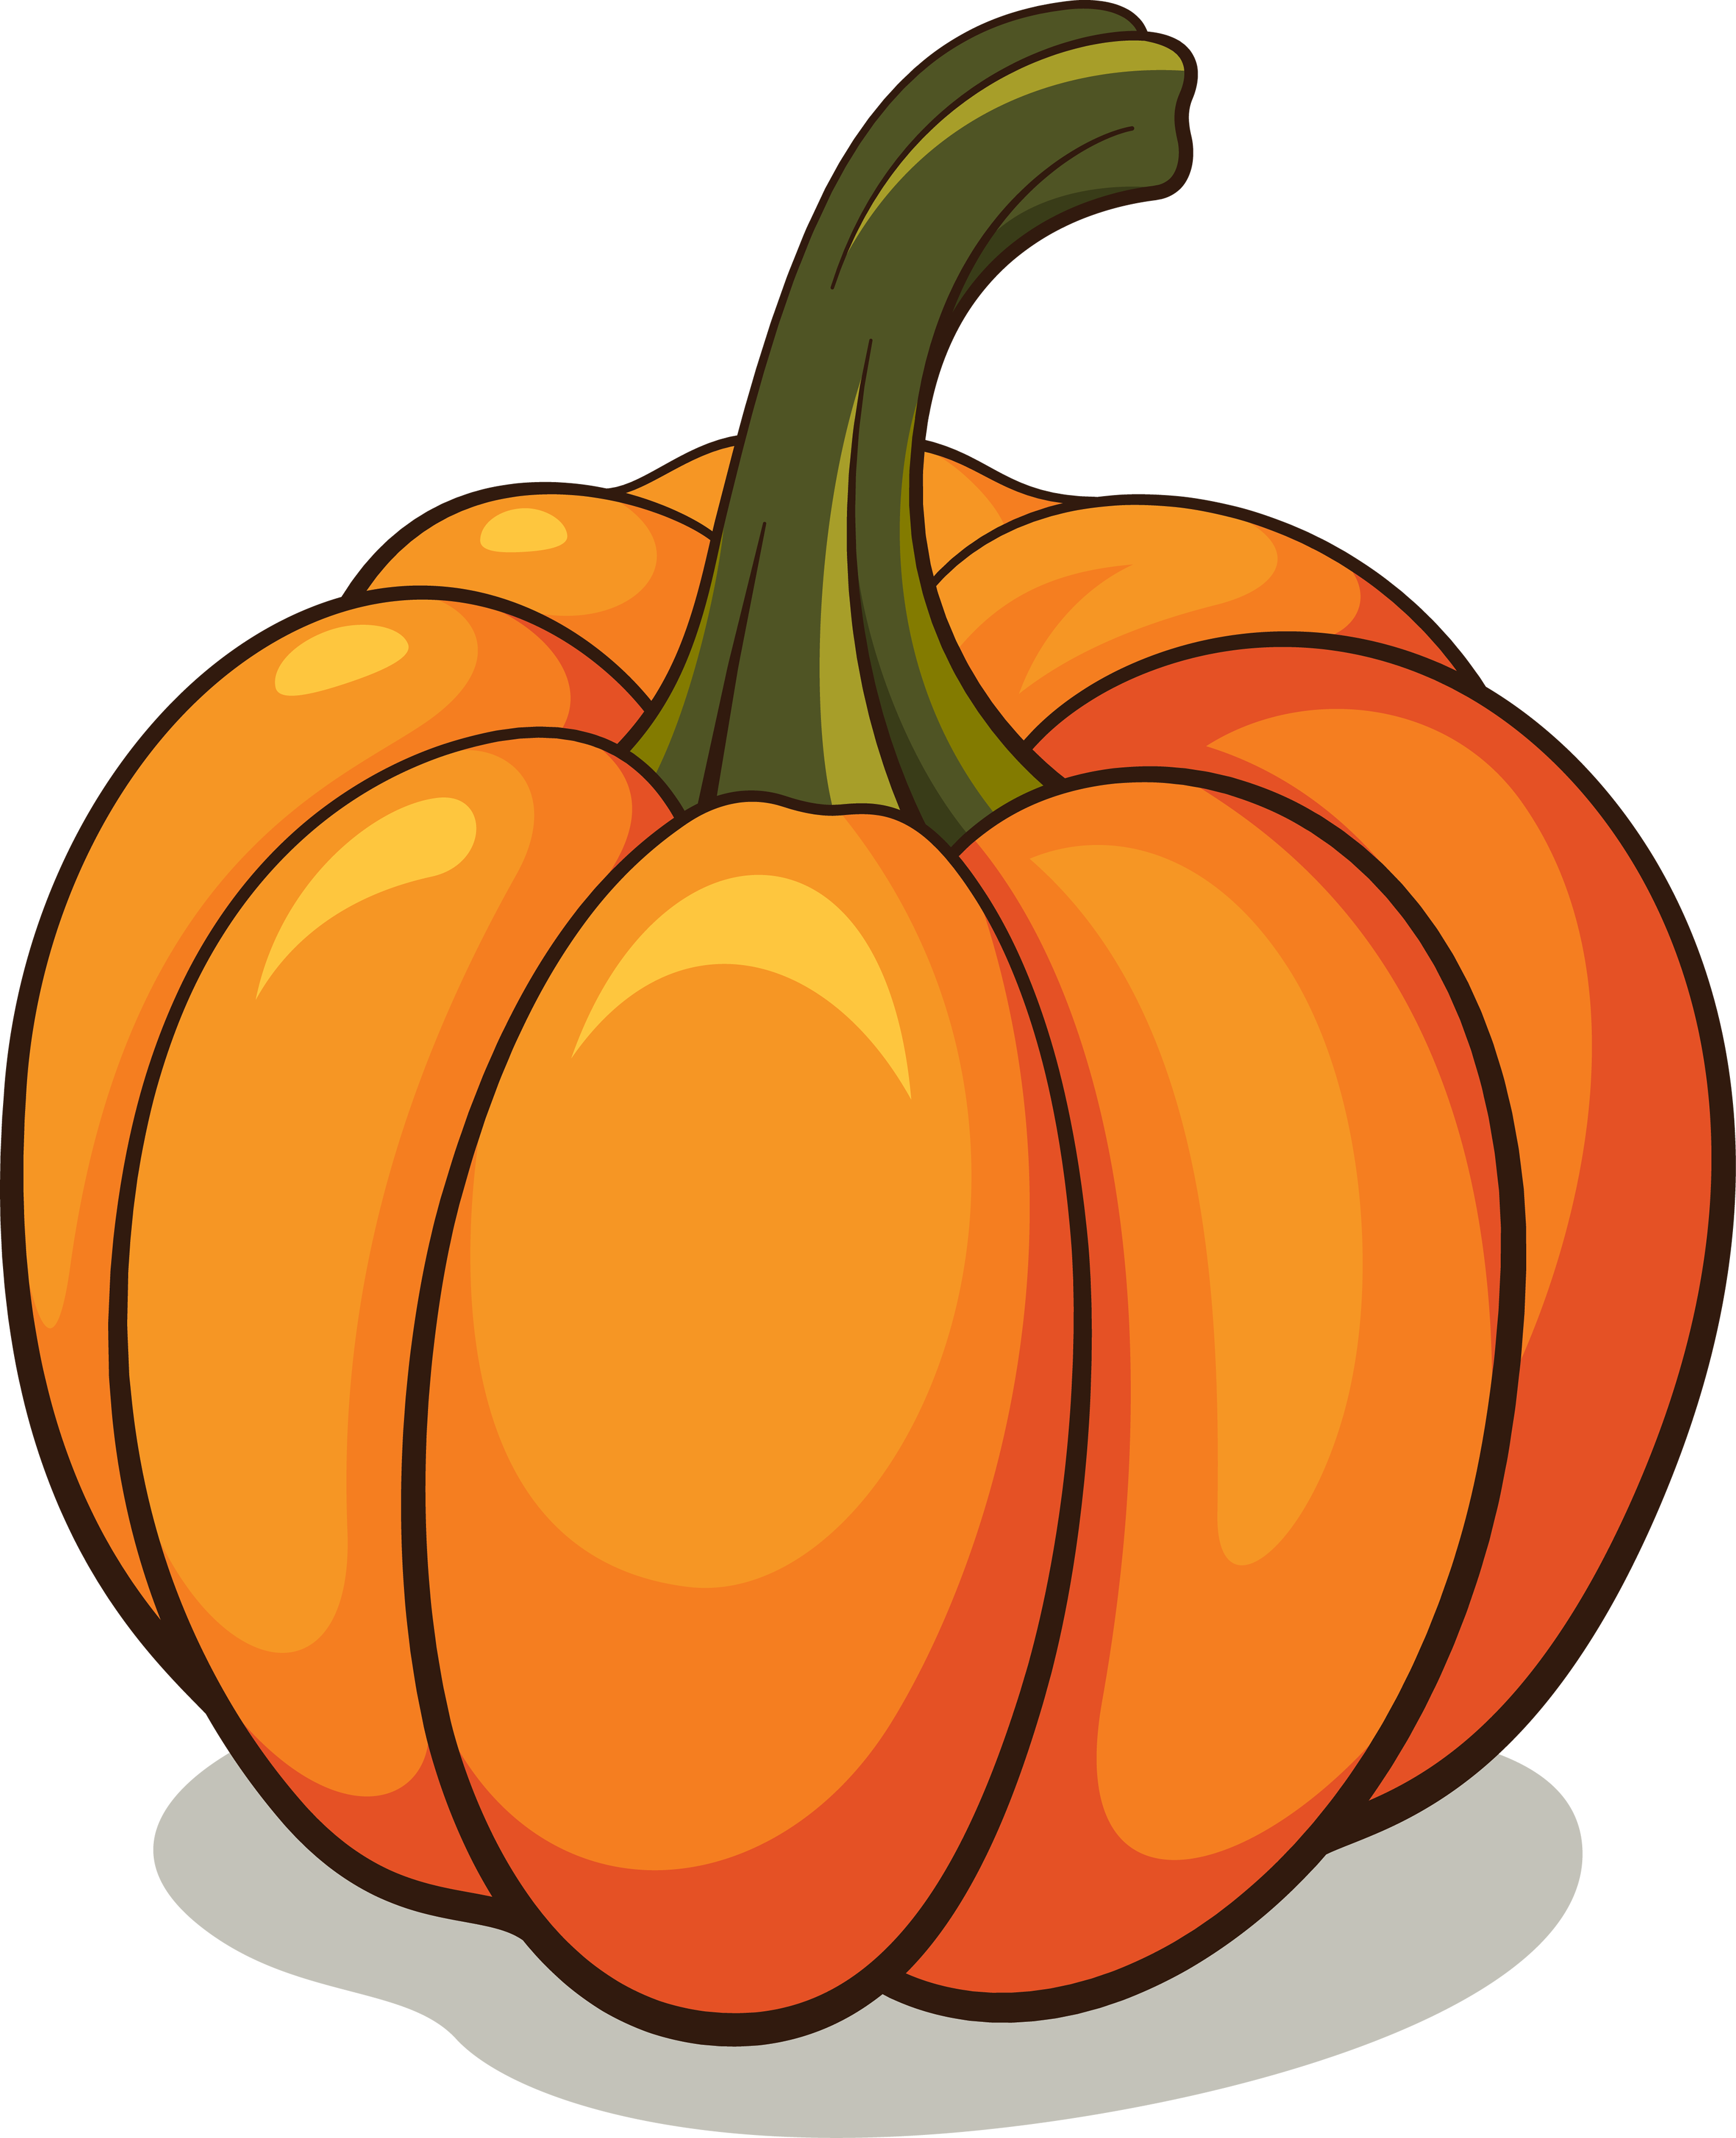 Pumpkin PNG image free download